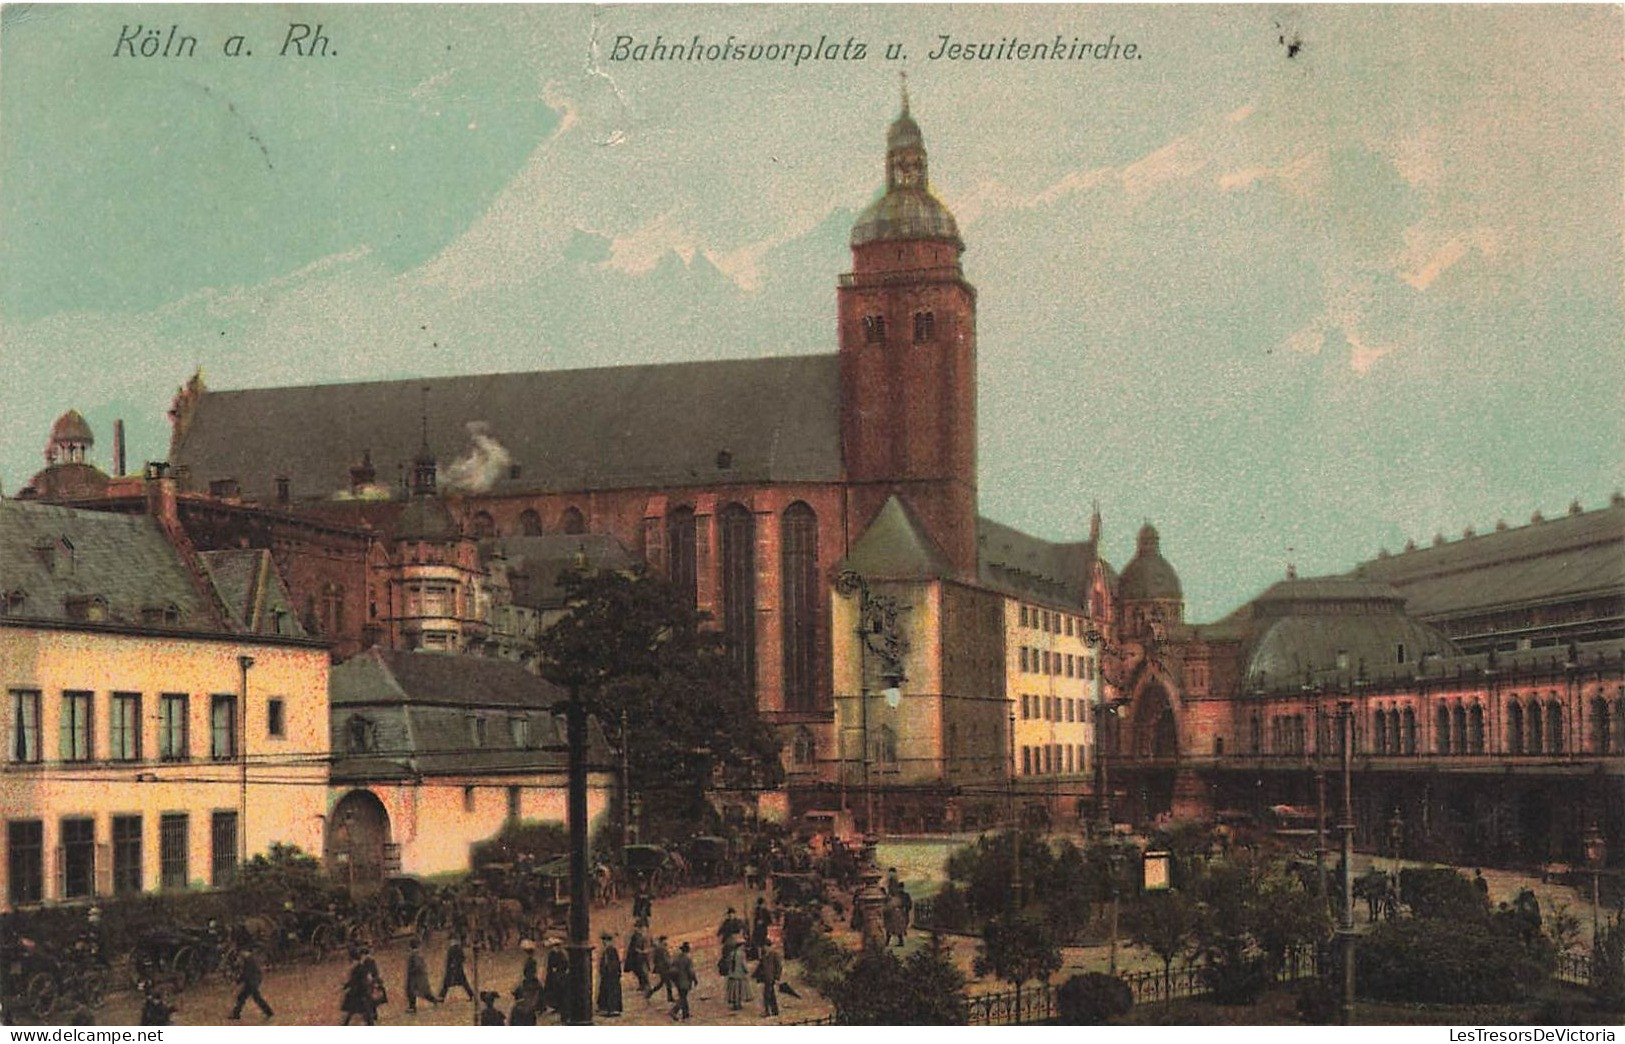 ALLEMAGNE - Köln Am Rhein - Bahnhofsvorplatz Und Jesuitenkirche - Colorisé - Animé - Carte Postale Ancienne - Koeln